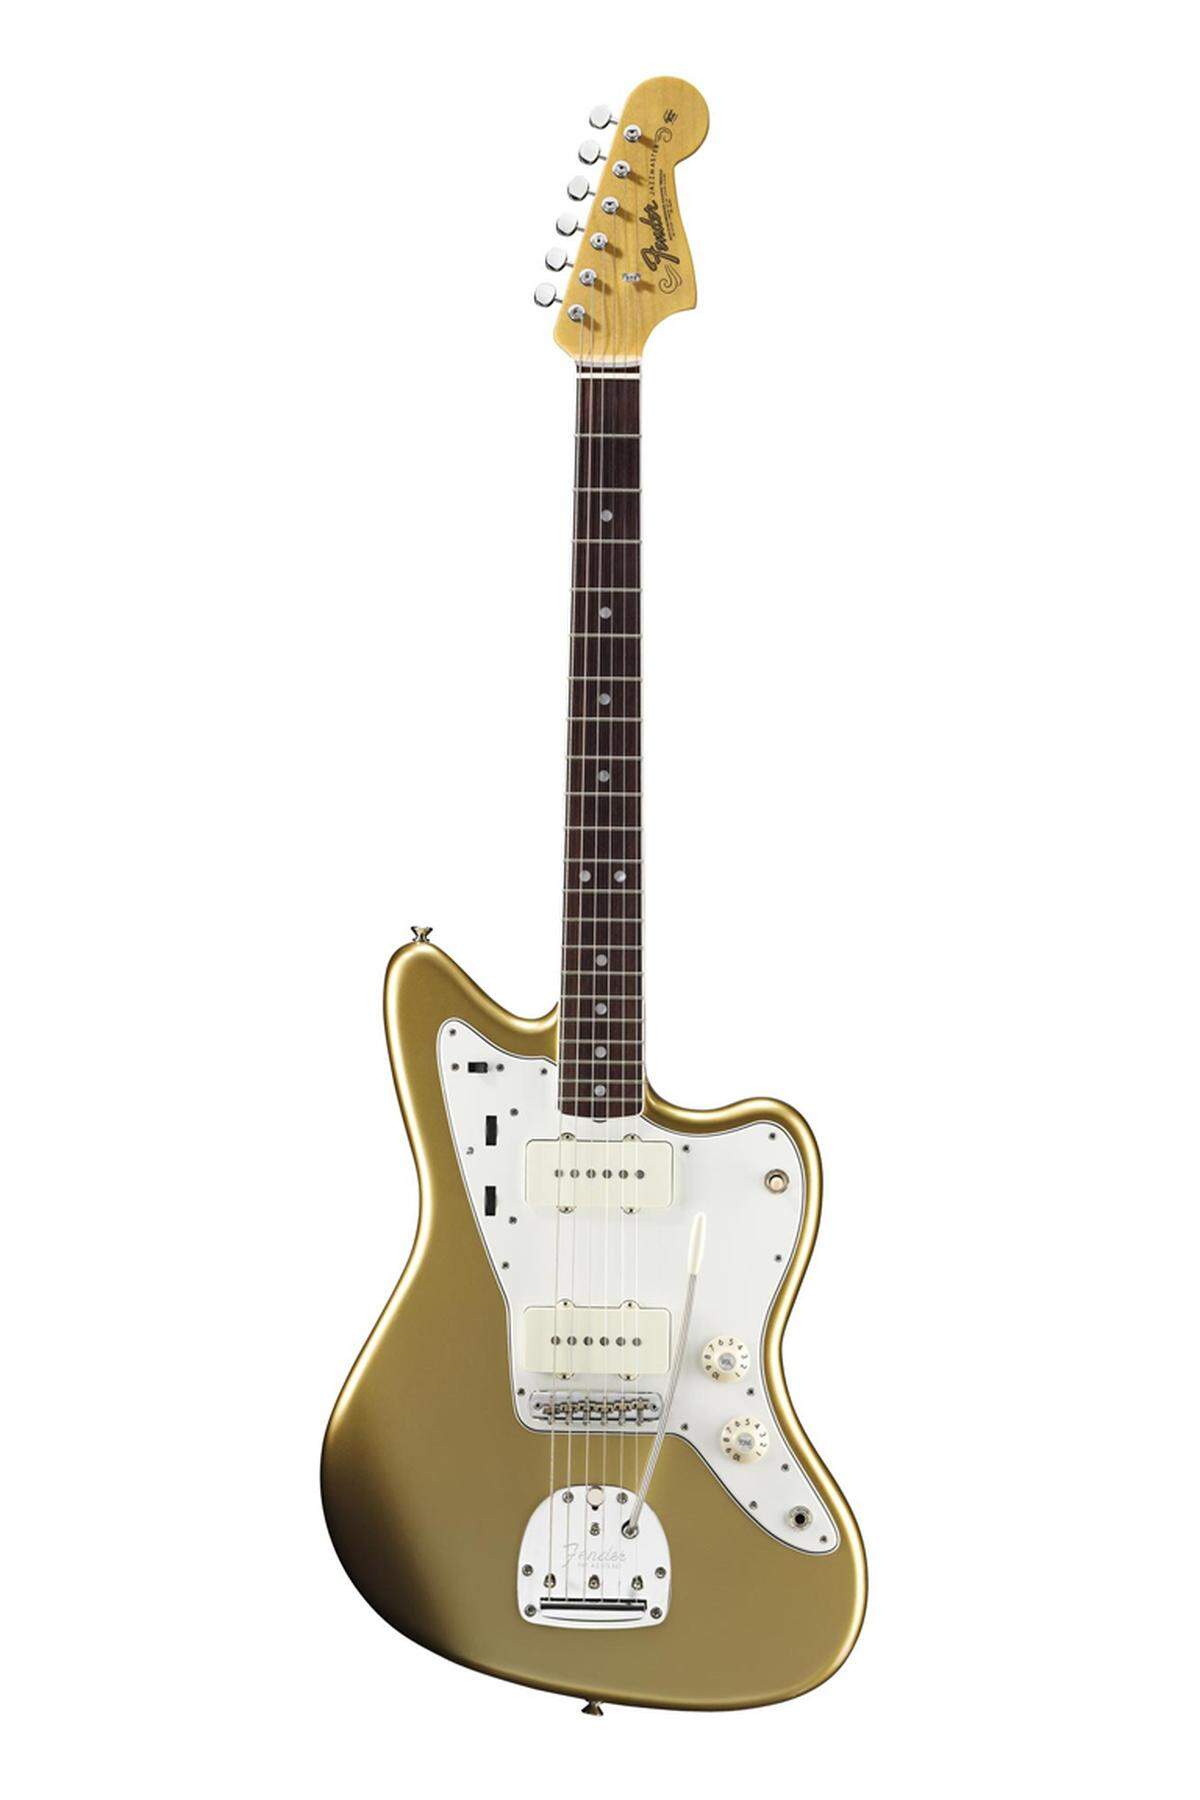 Fender American Vintage ’65 Jazzmaster in der Farbe Aztec Gold, 2049 Euro. www.fender.com